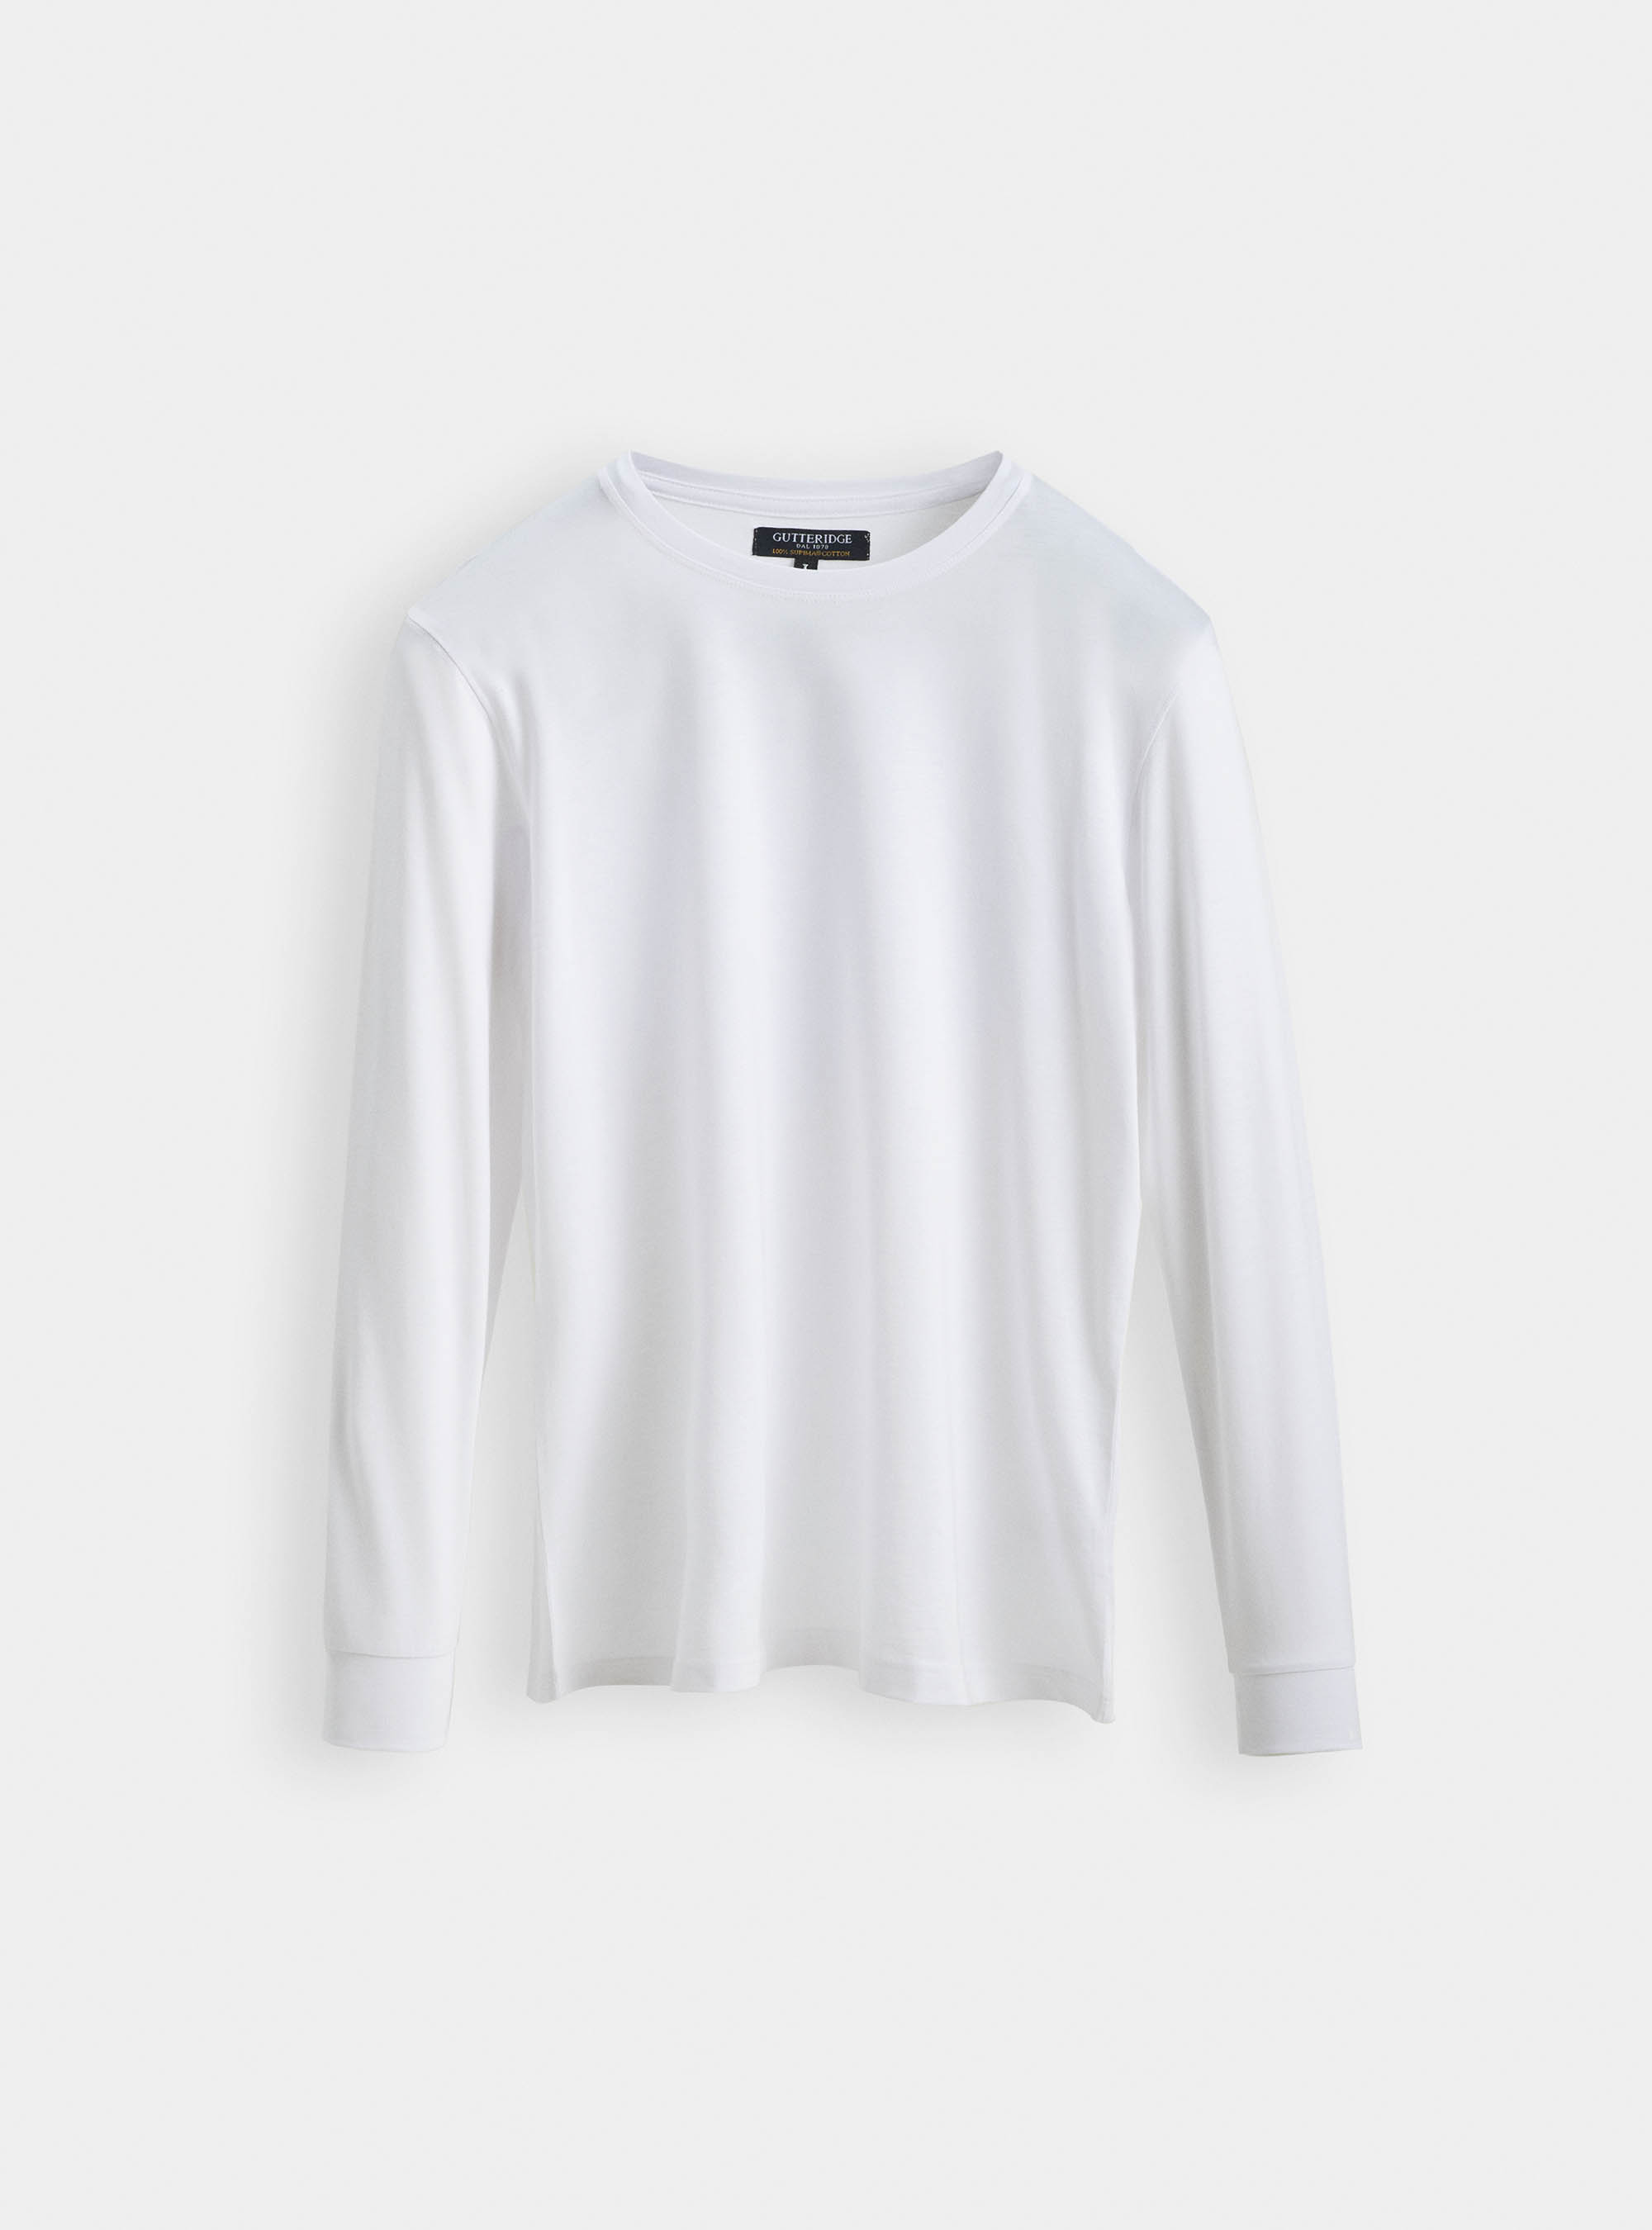 100% cotton supima jersey long-sleeved T-shirt